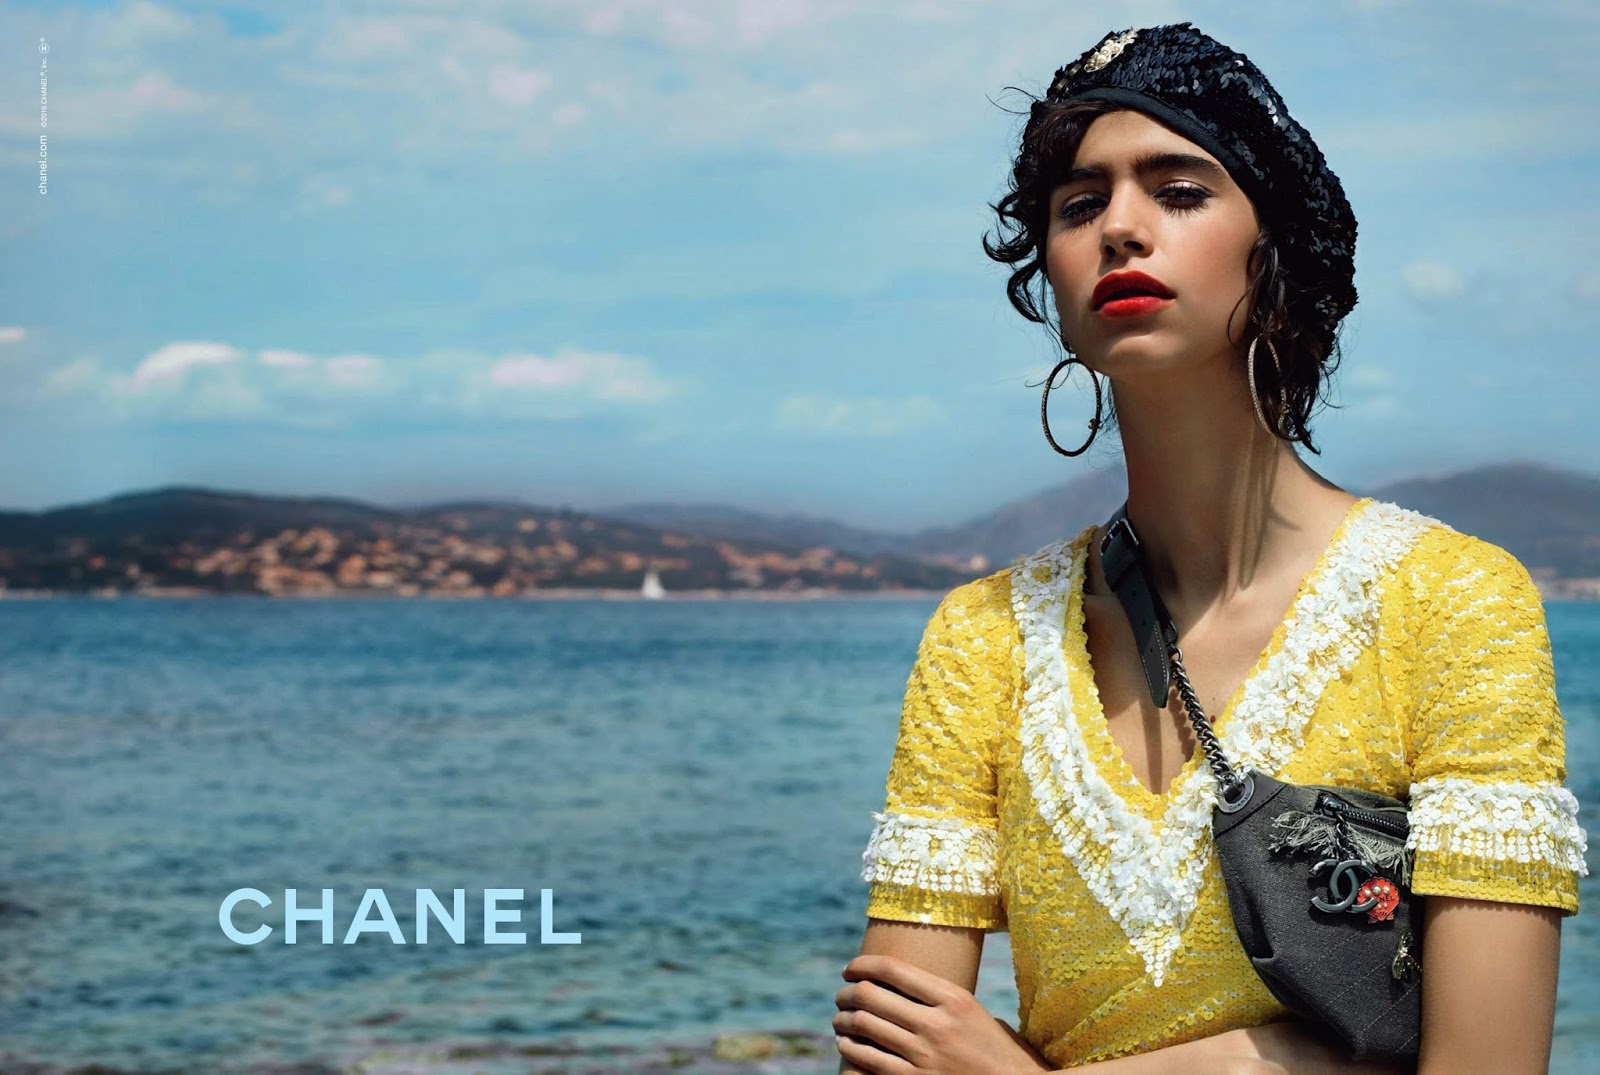 Chanel 2017 Ads Campaign